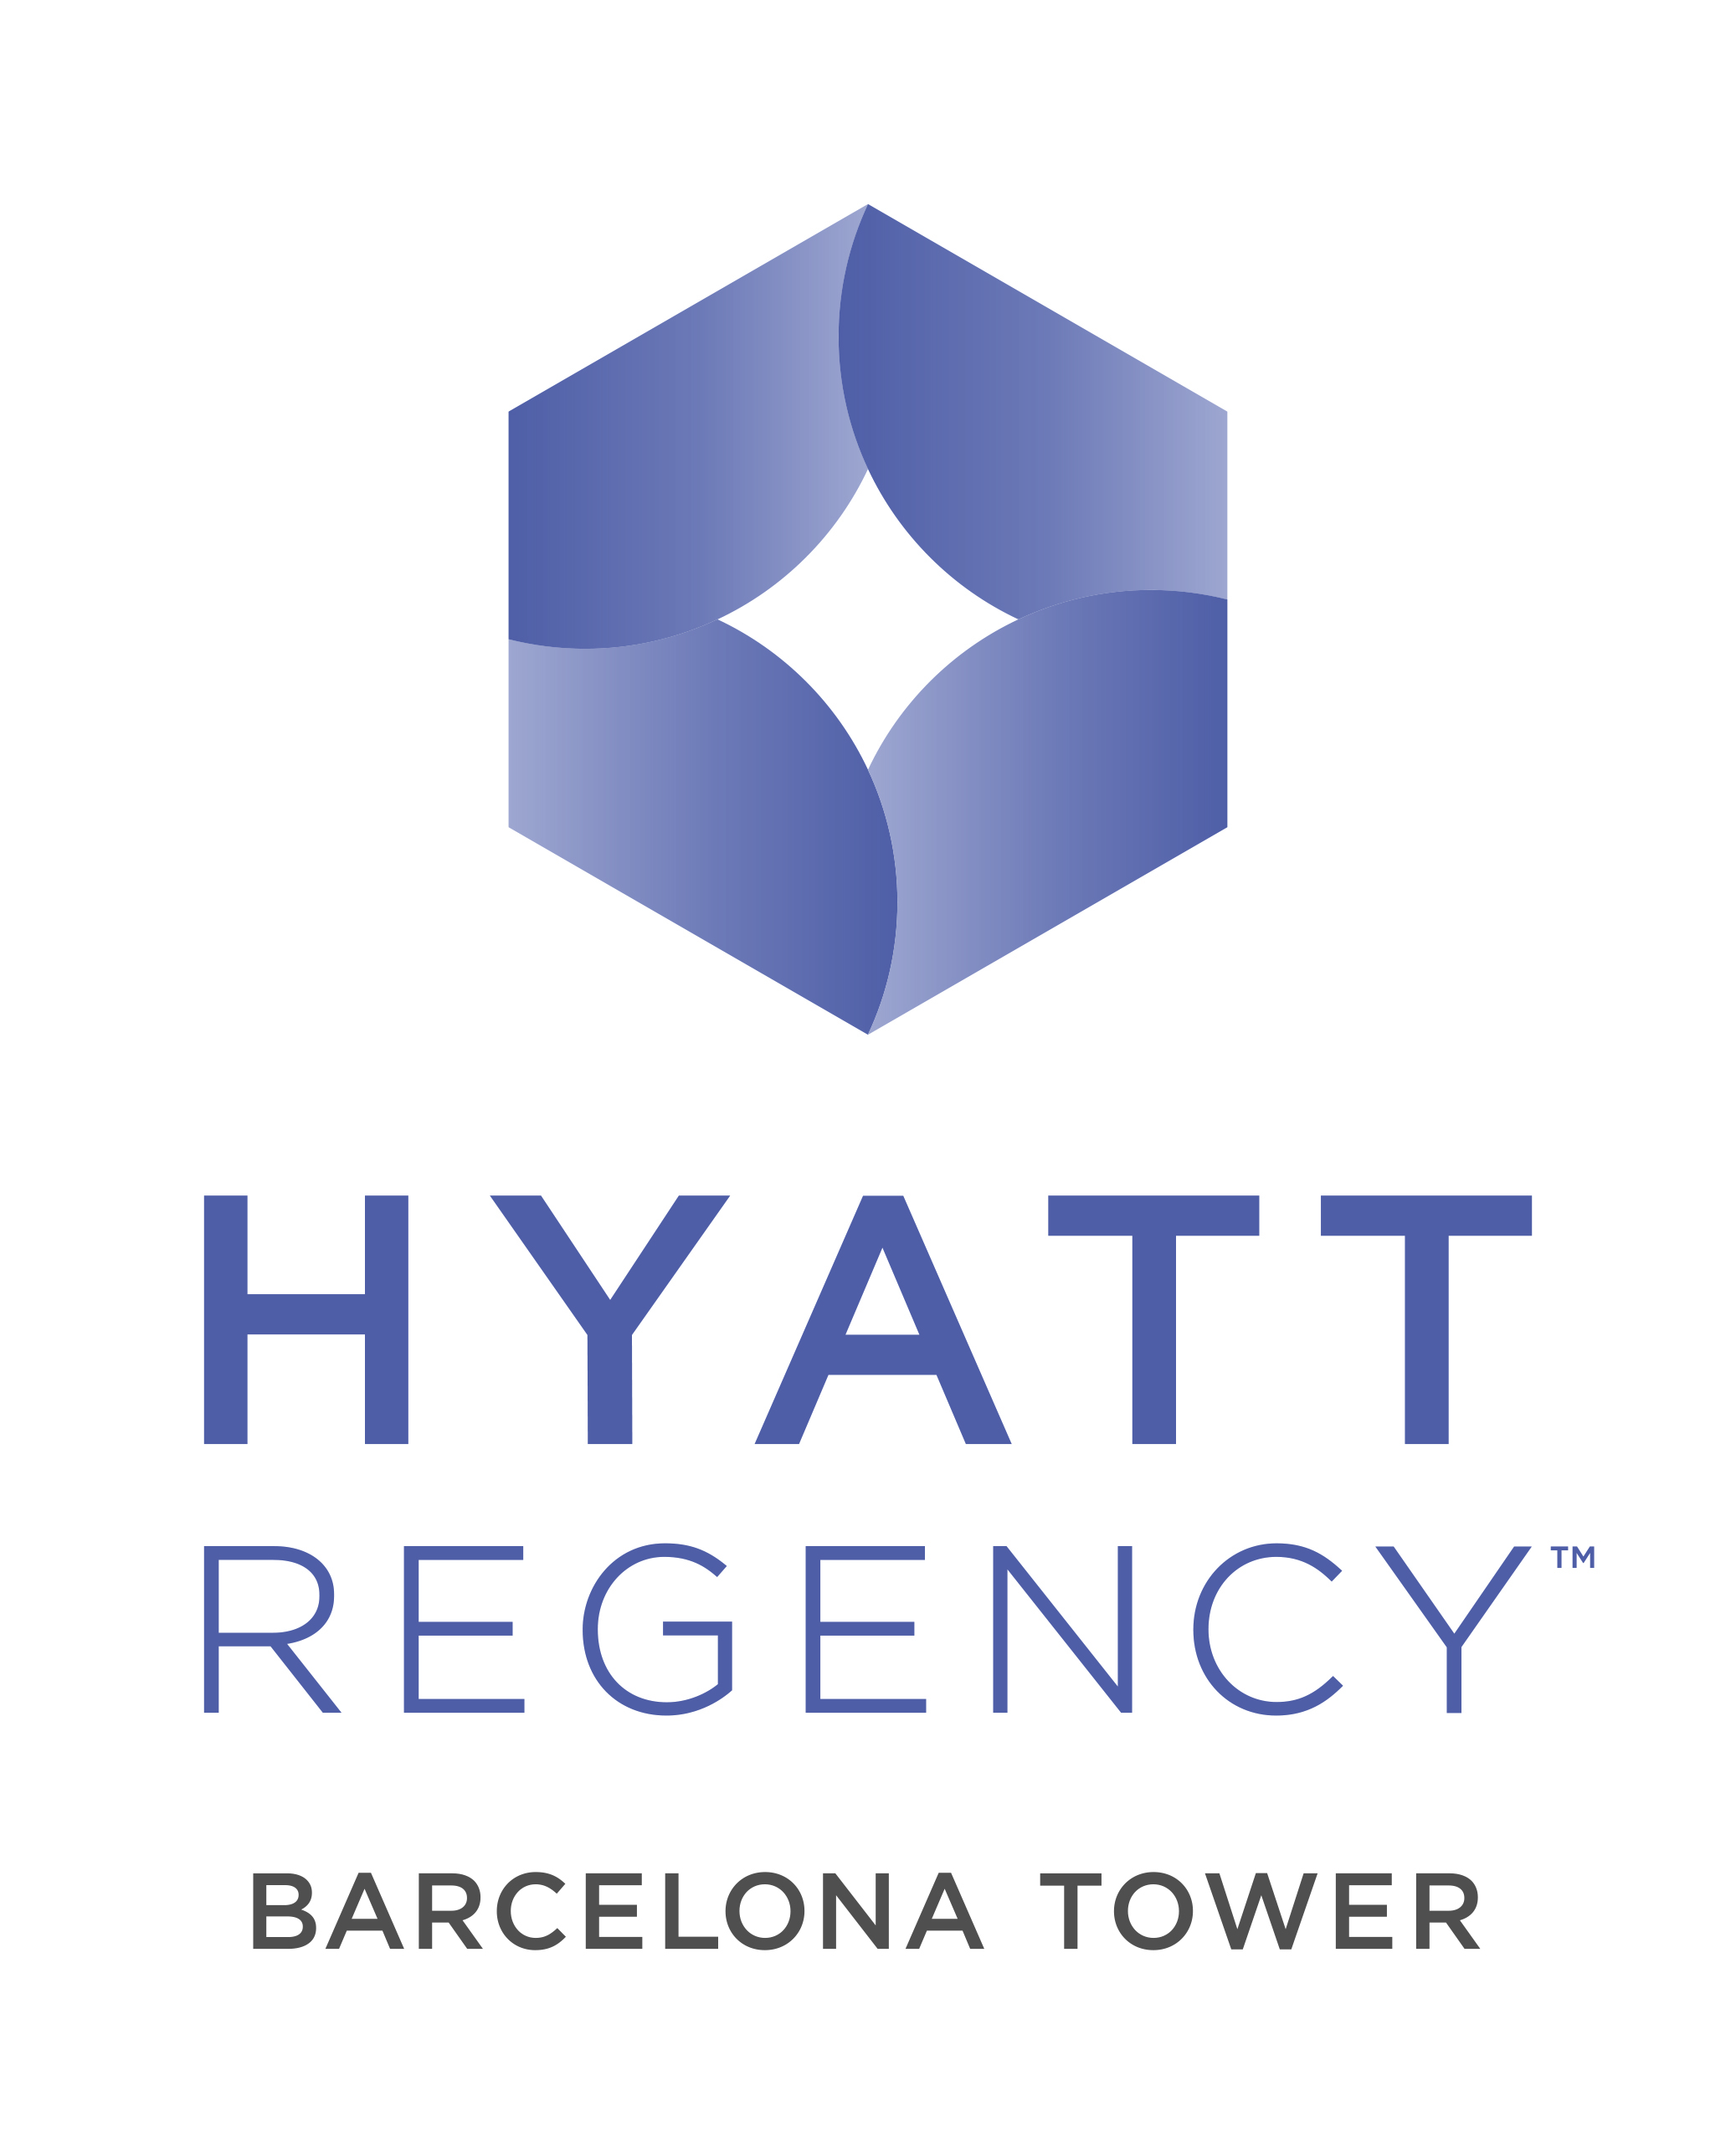 hotel-logo